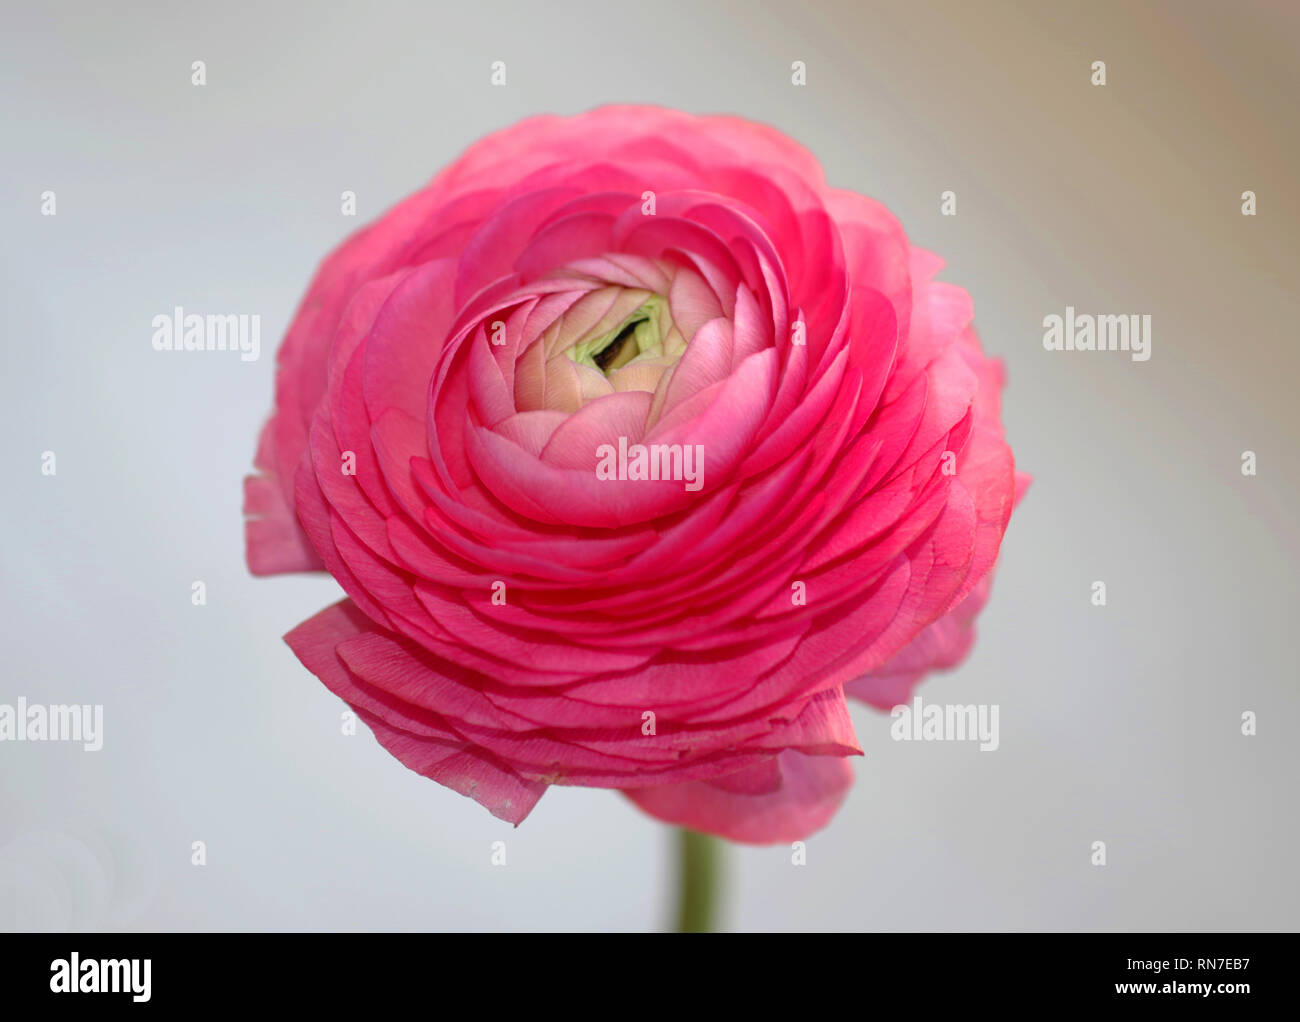 Pink Turban flower (ranunculus) close-up Stock Photo